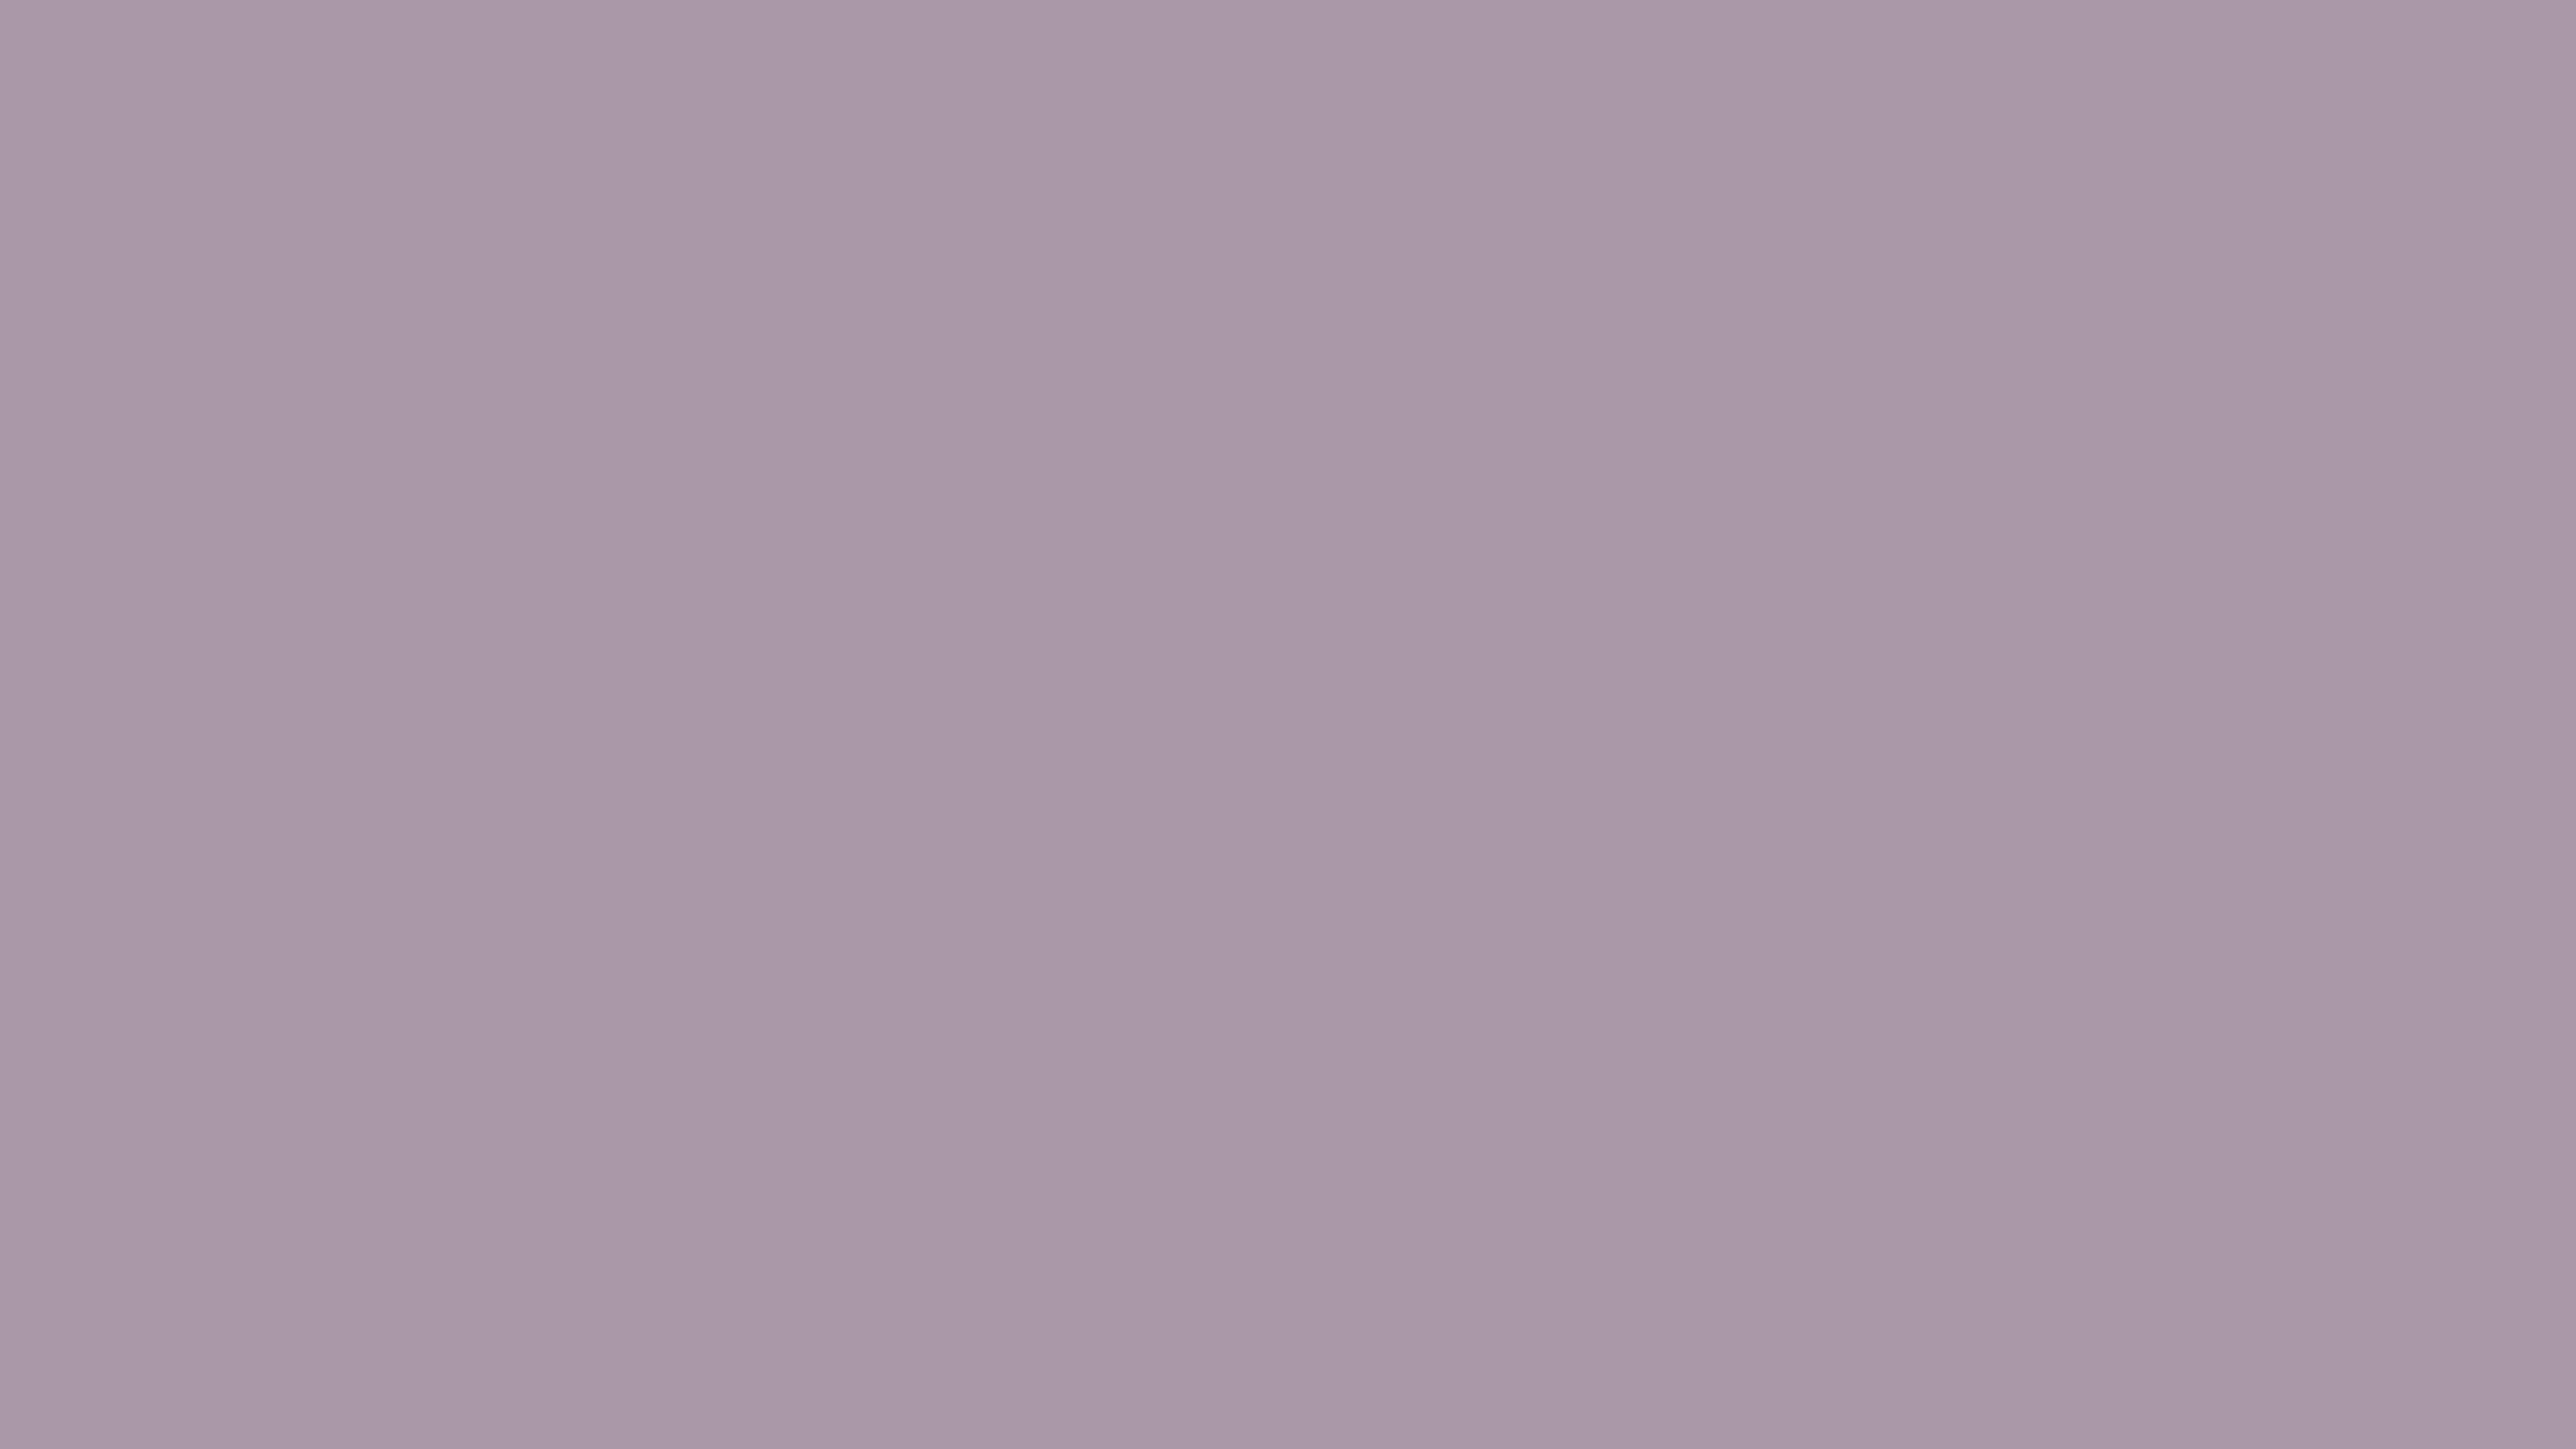 4096x2304 Rose Quartz Solid Color Background